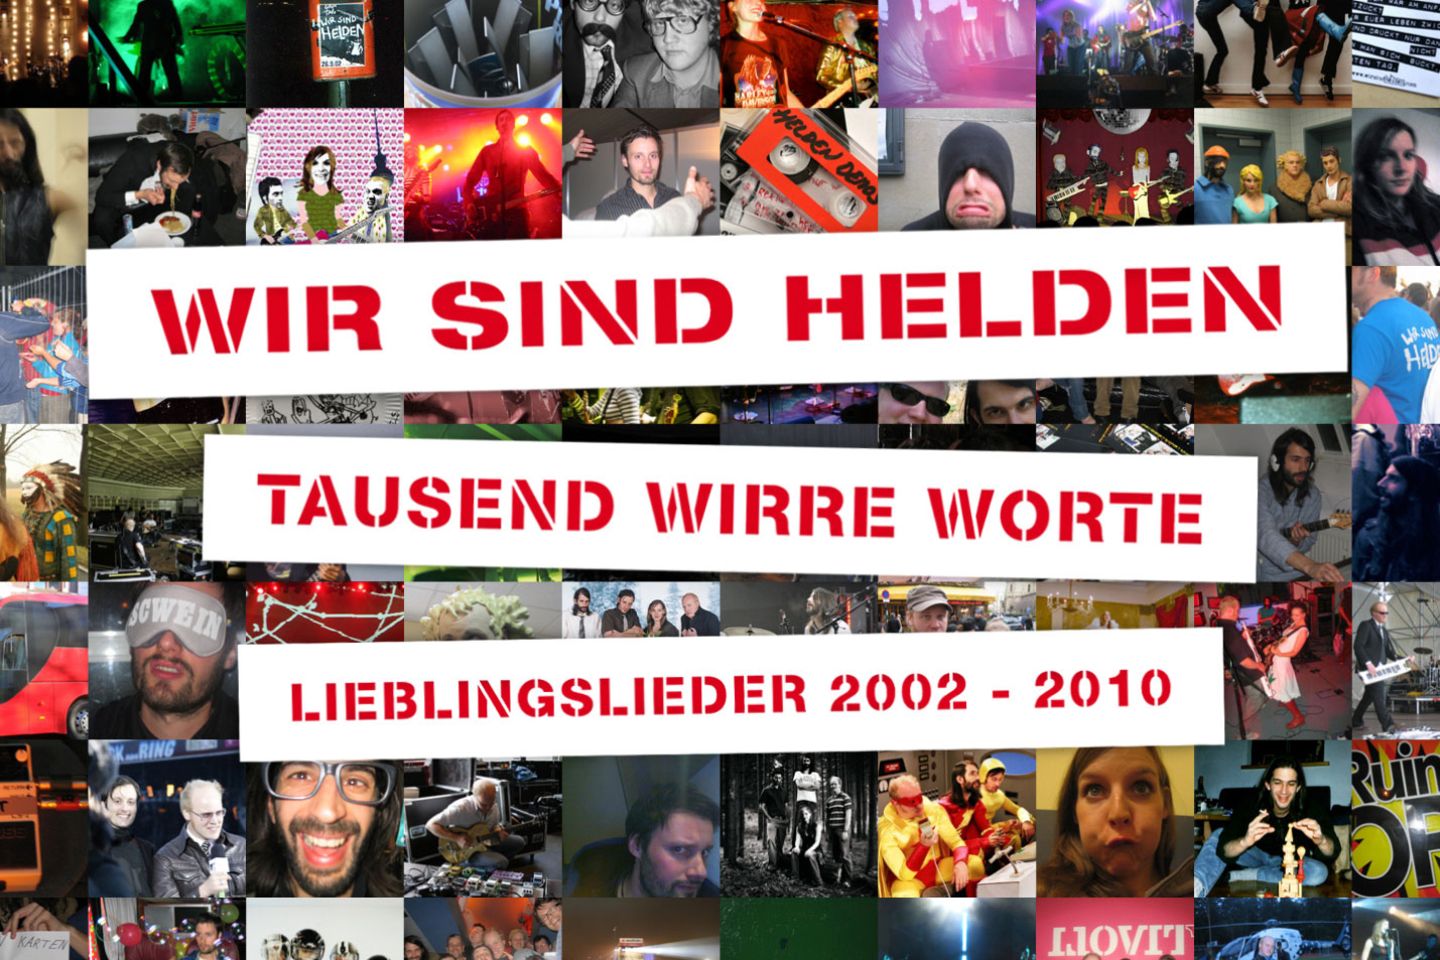 Wir Sind Helden: "Lieblingslieder 2002-2010"